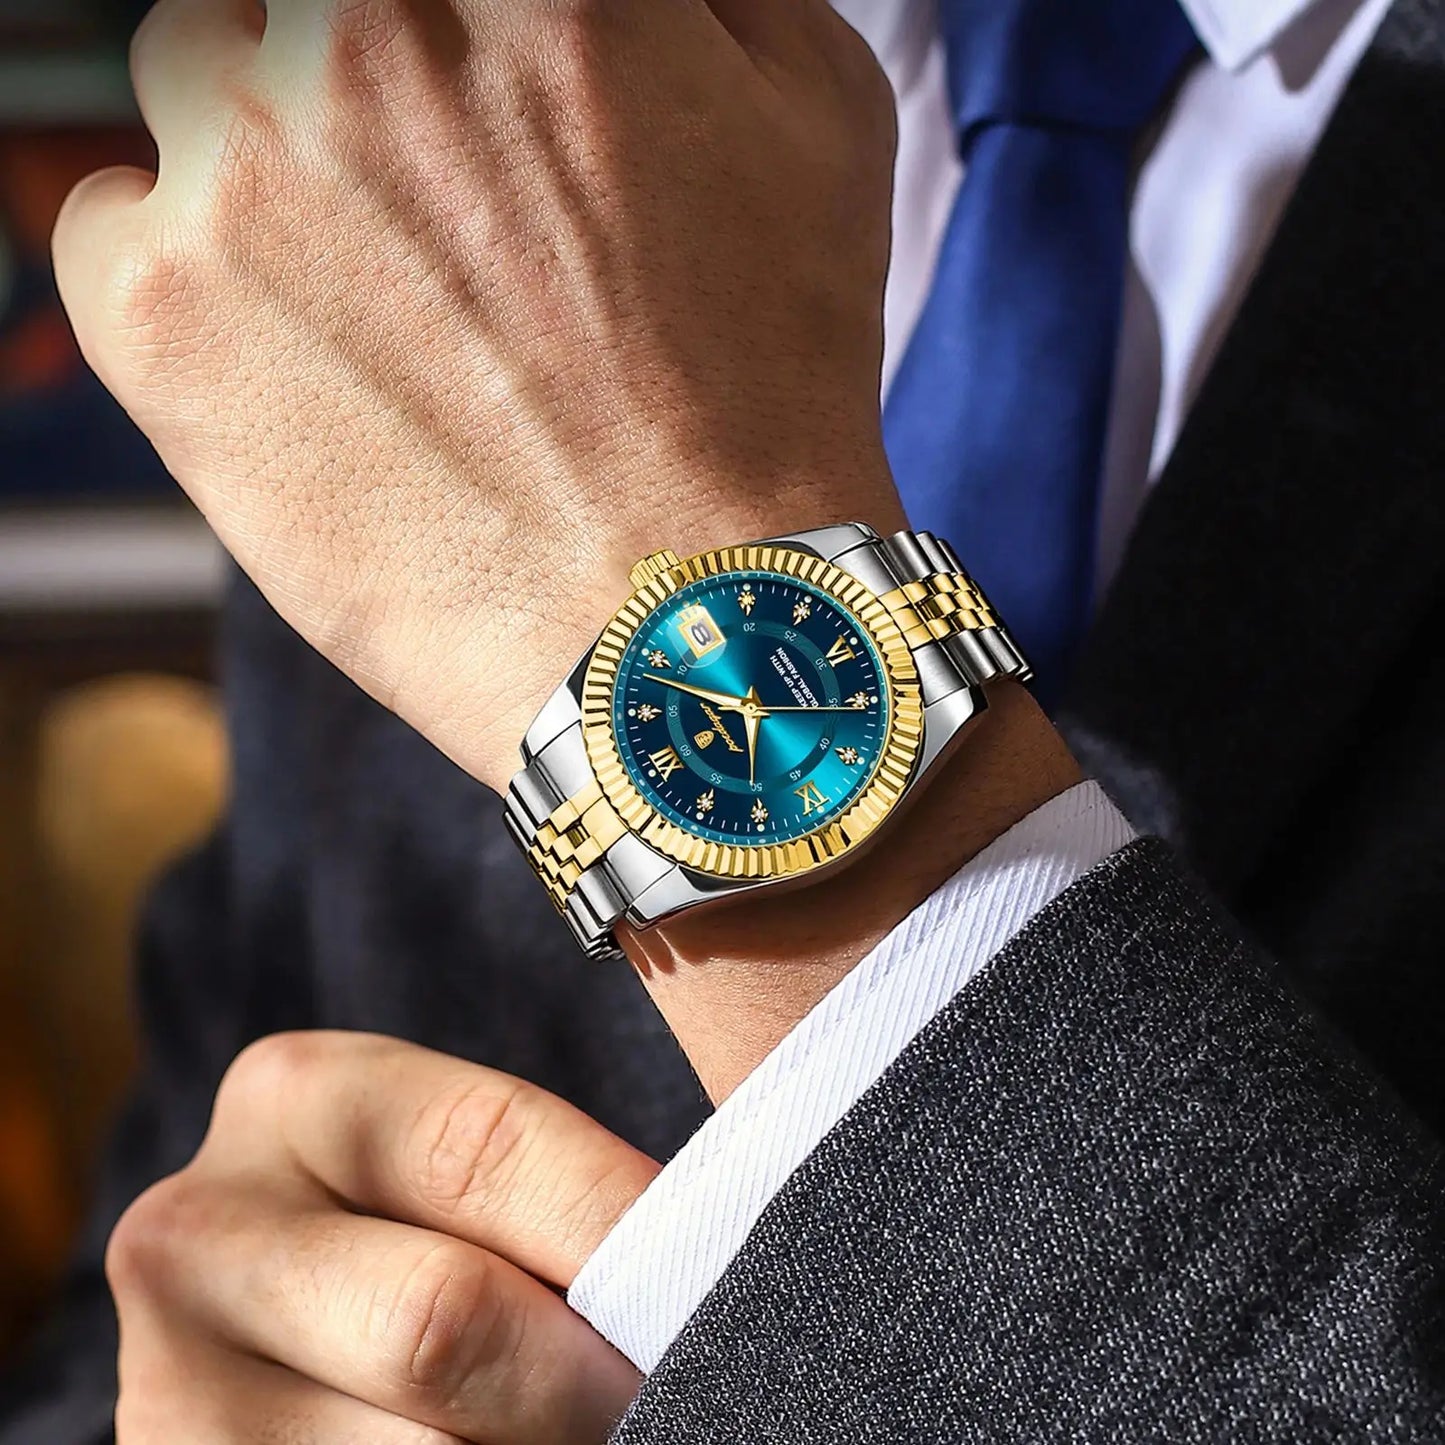 POEDAGAR Luxury Sport Wrist Watch For Man Waterproof Luminous Date Men Watch Quartz Stainless Steel Men's Watches Male Reloj+box